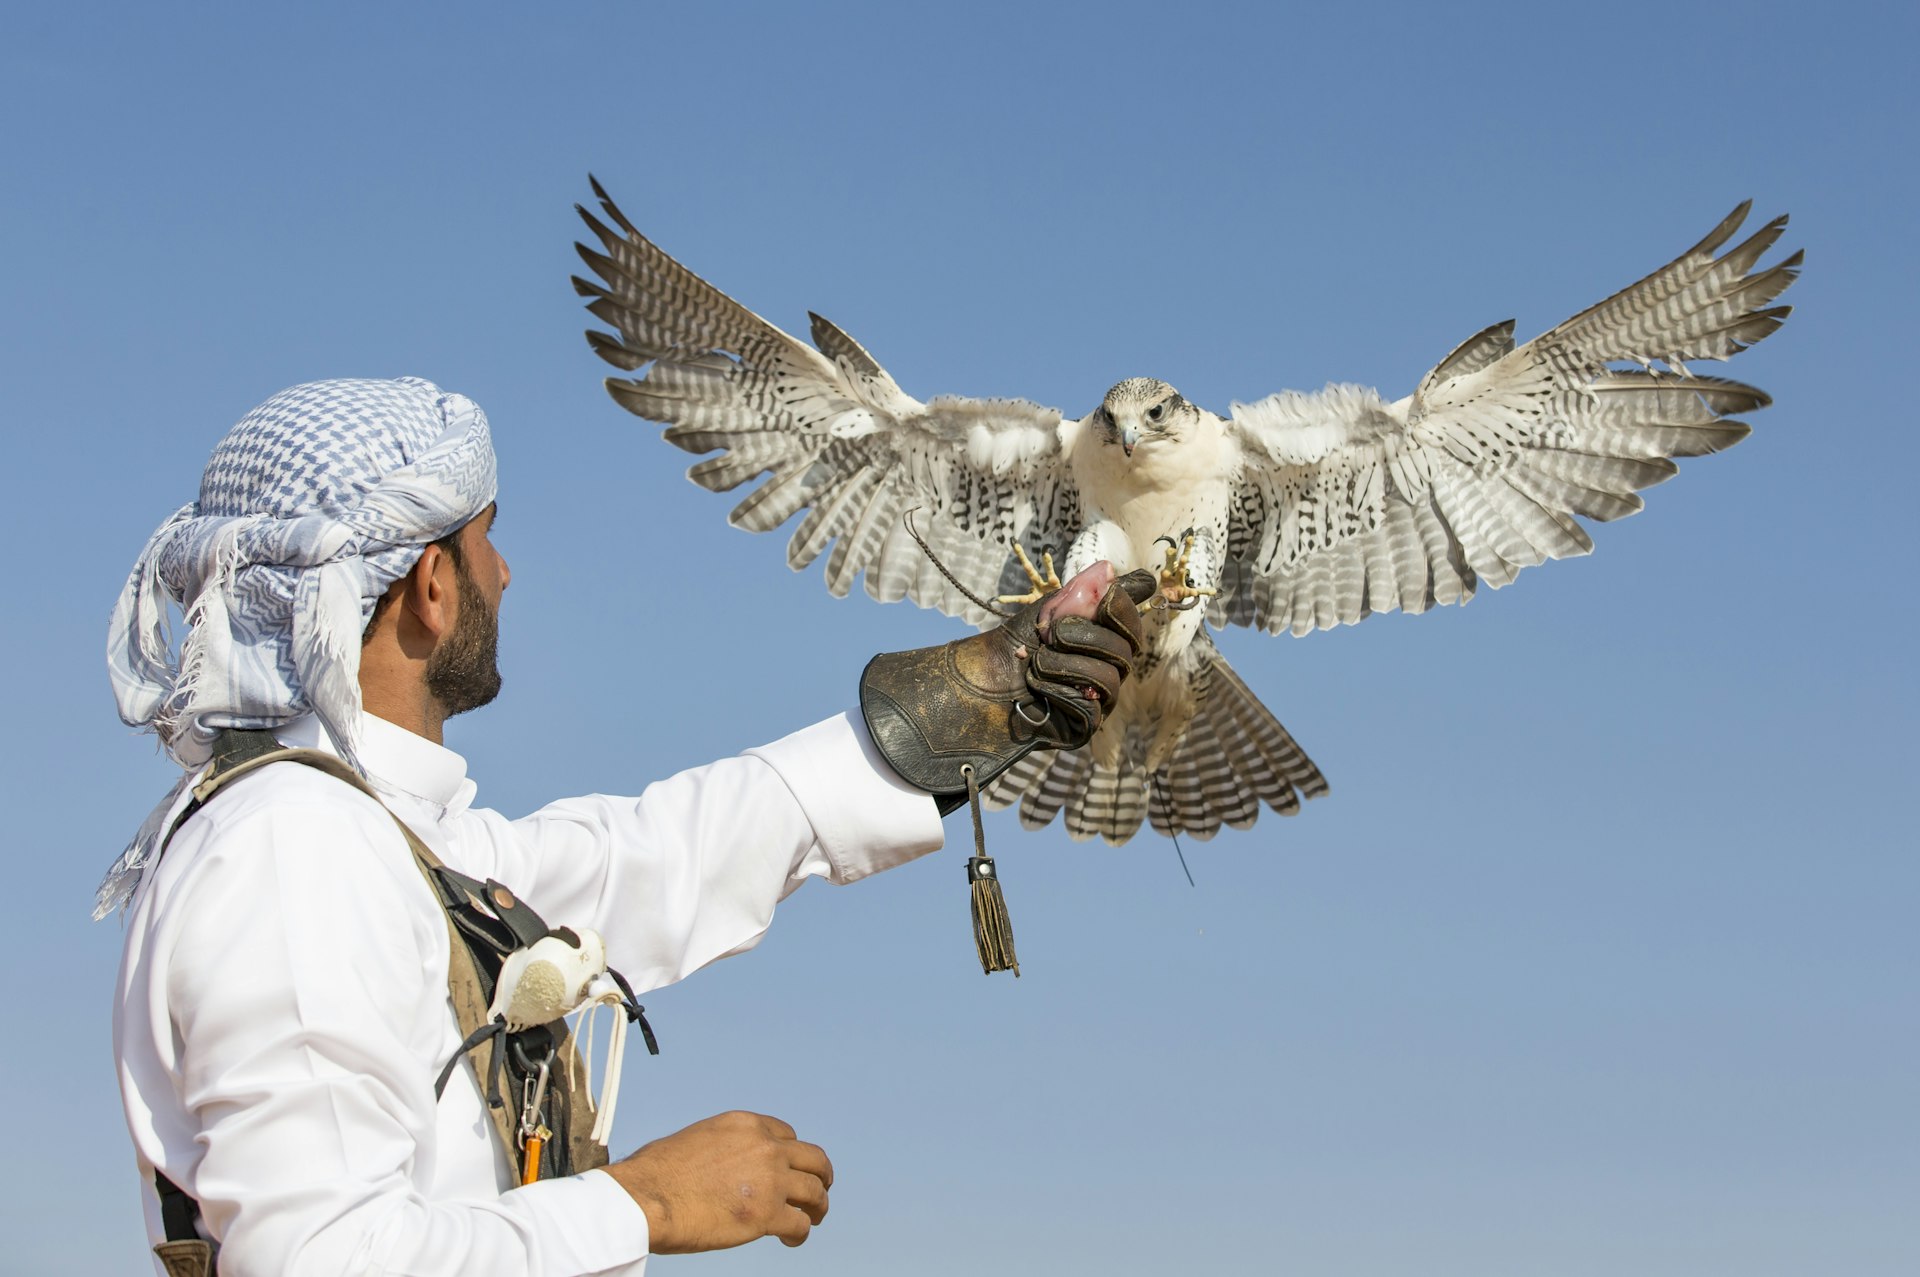 A falconer in a traditional outfit, training a Peregrine Falcon (Falco Peregrinus) near Dubai.